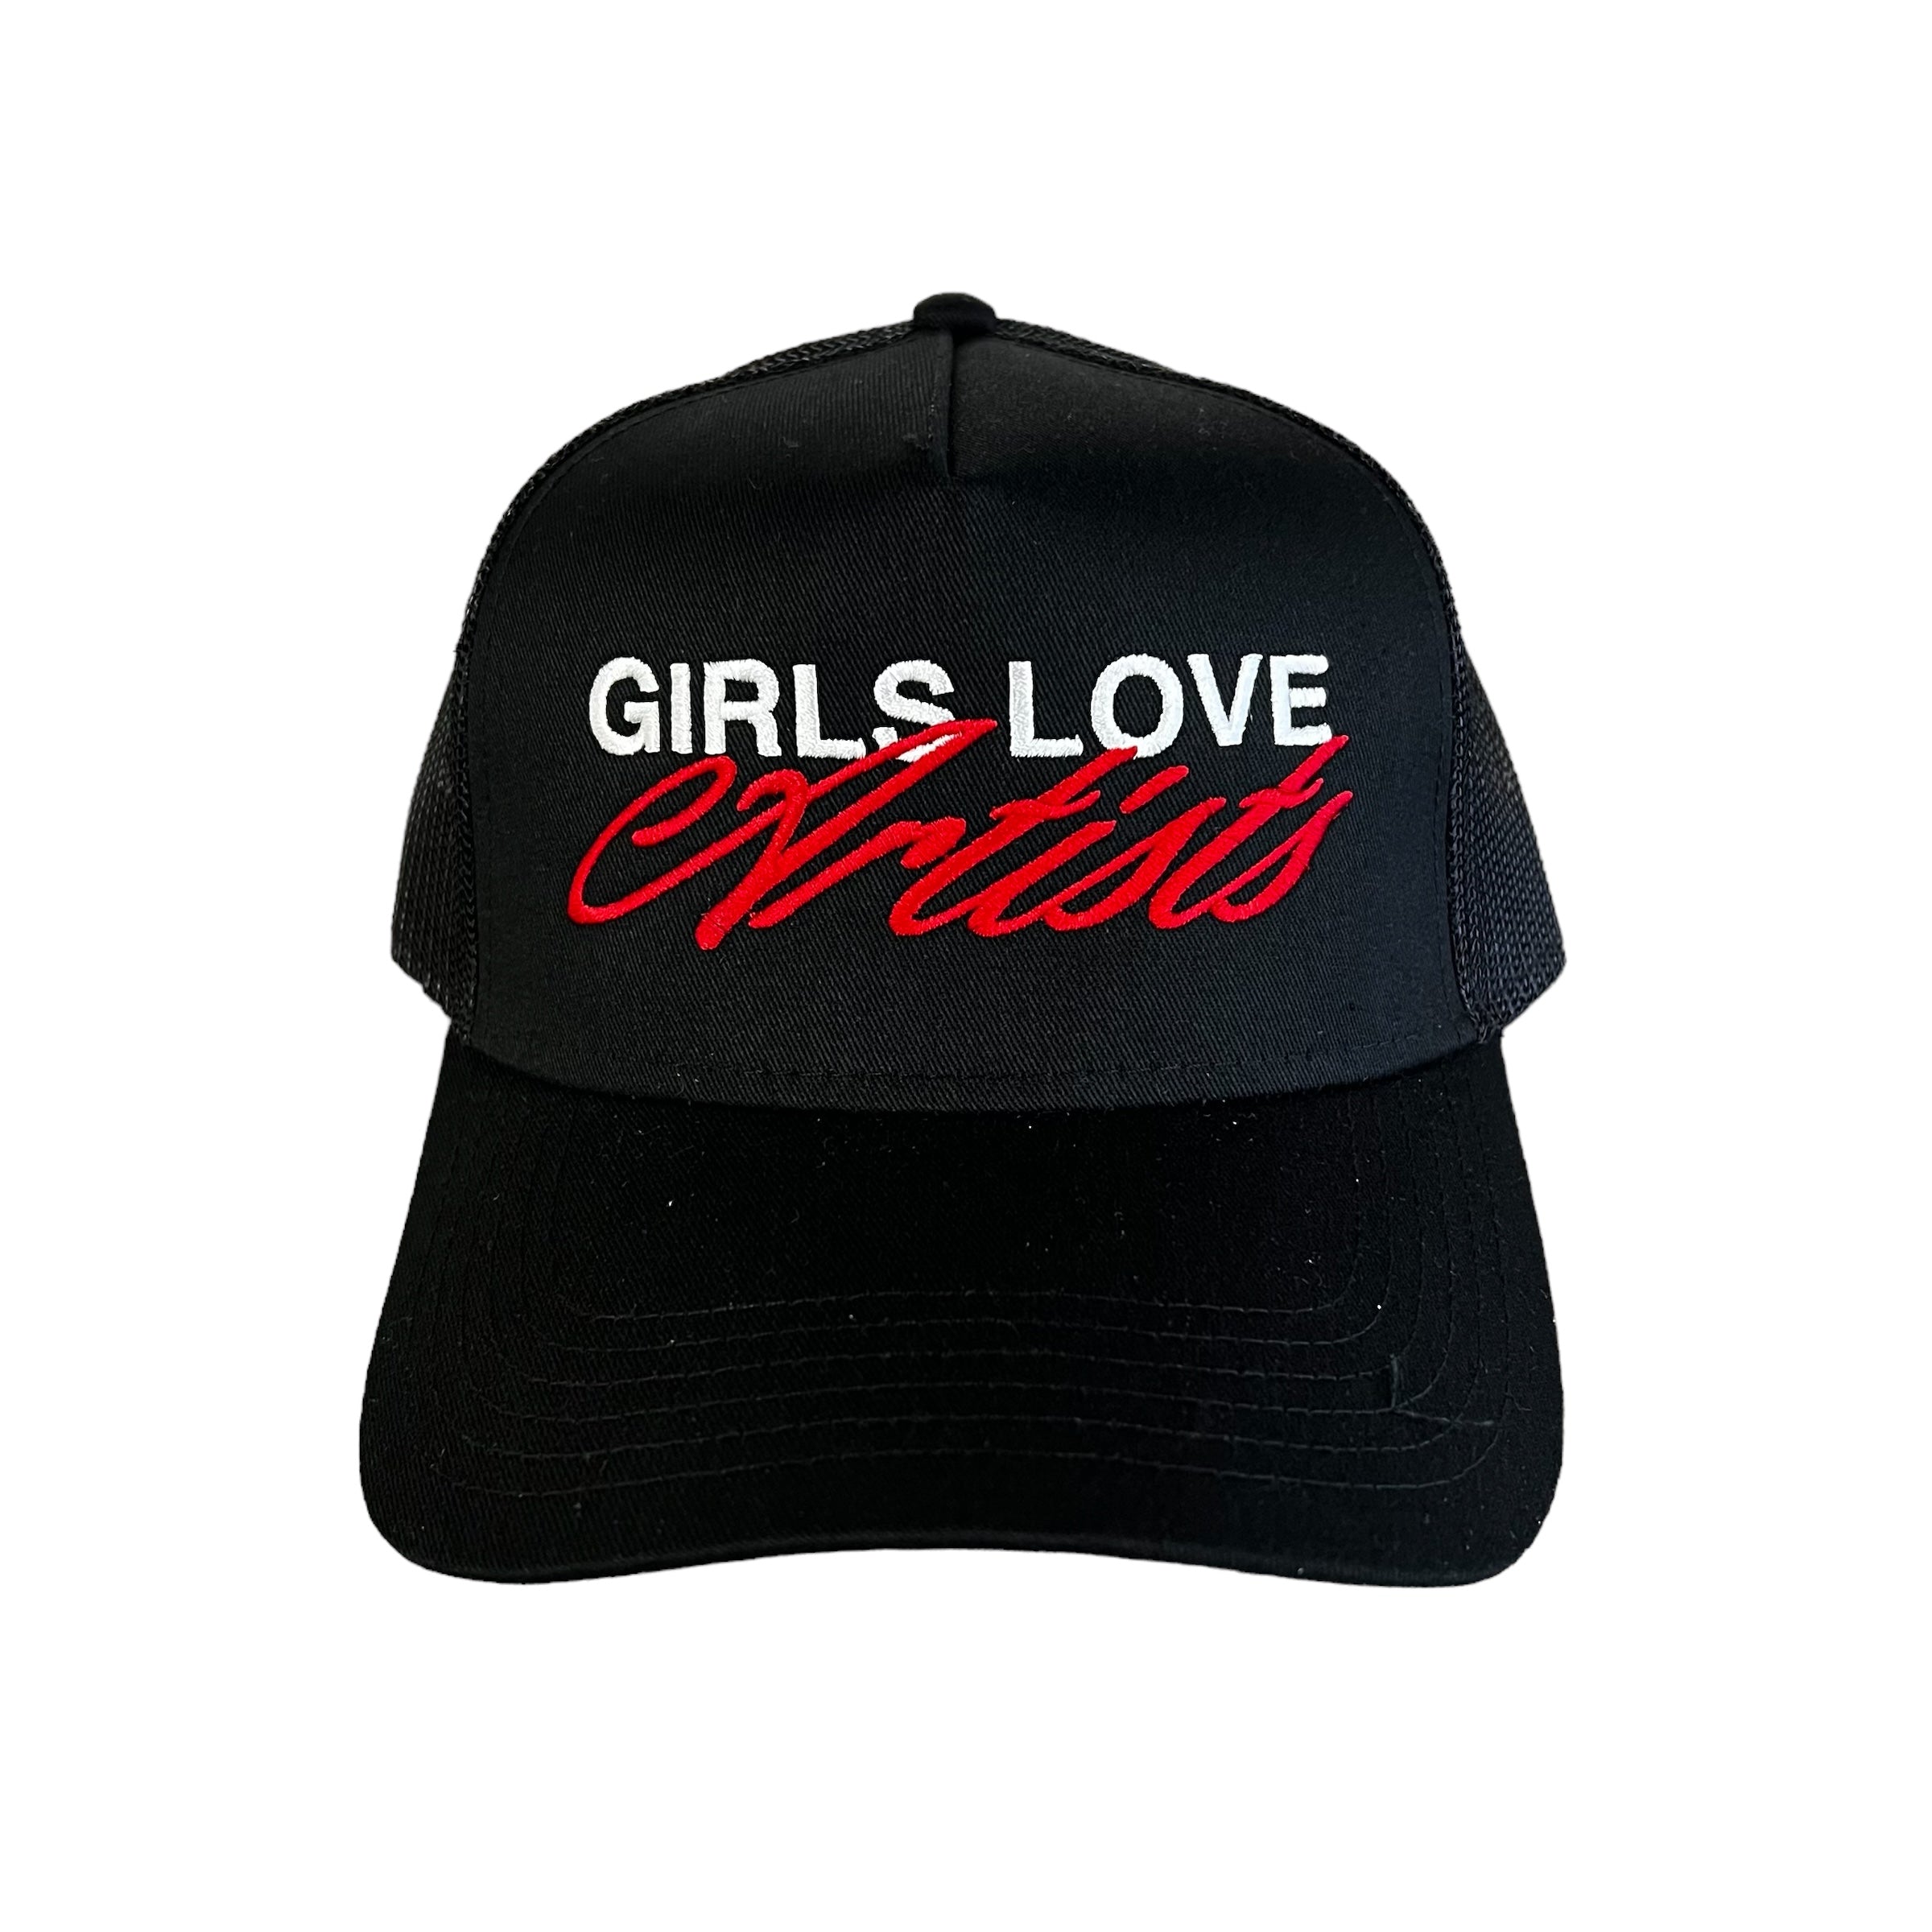 Girls Love Artists Trucker Hat Black